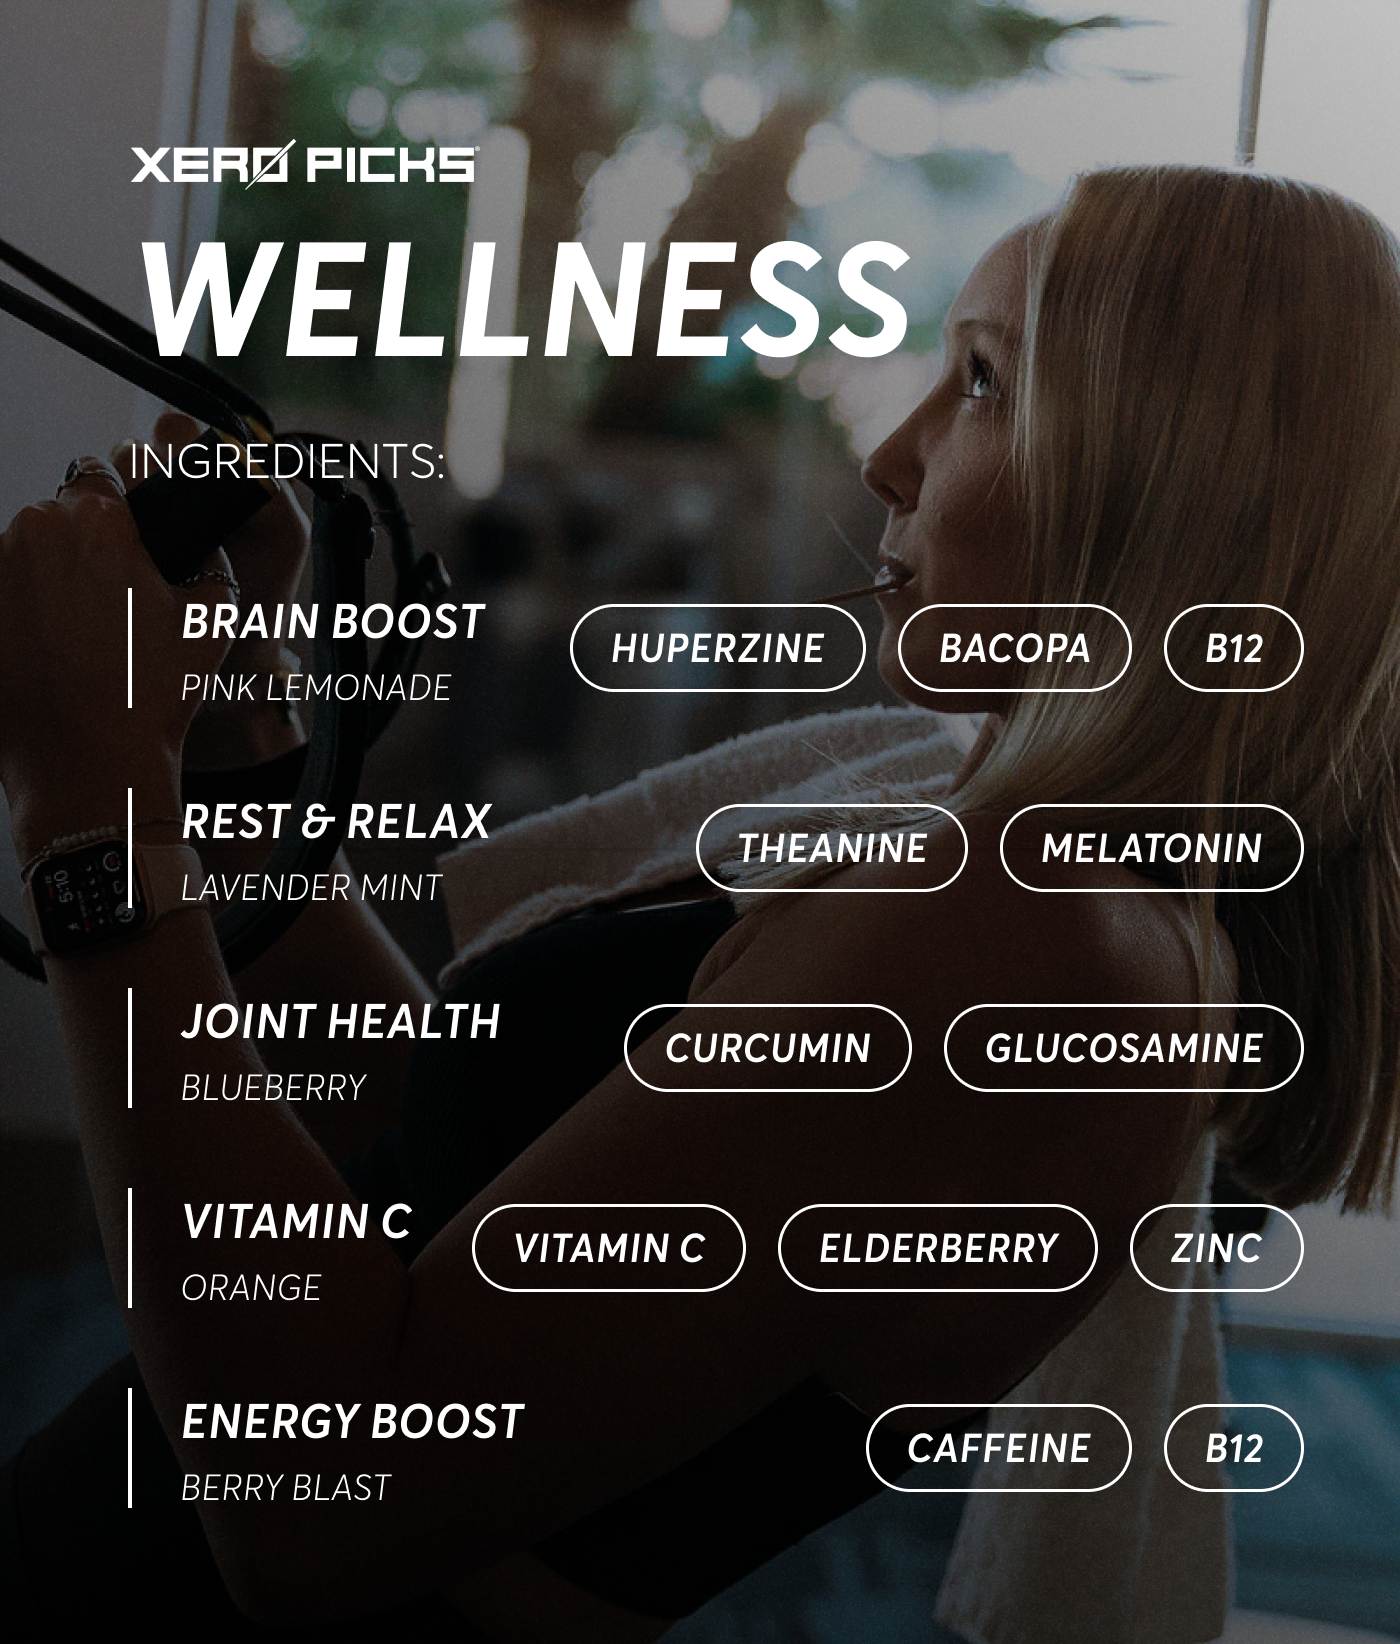 Xero Picks Wellness - Joint Health - Blueberry